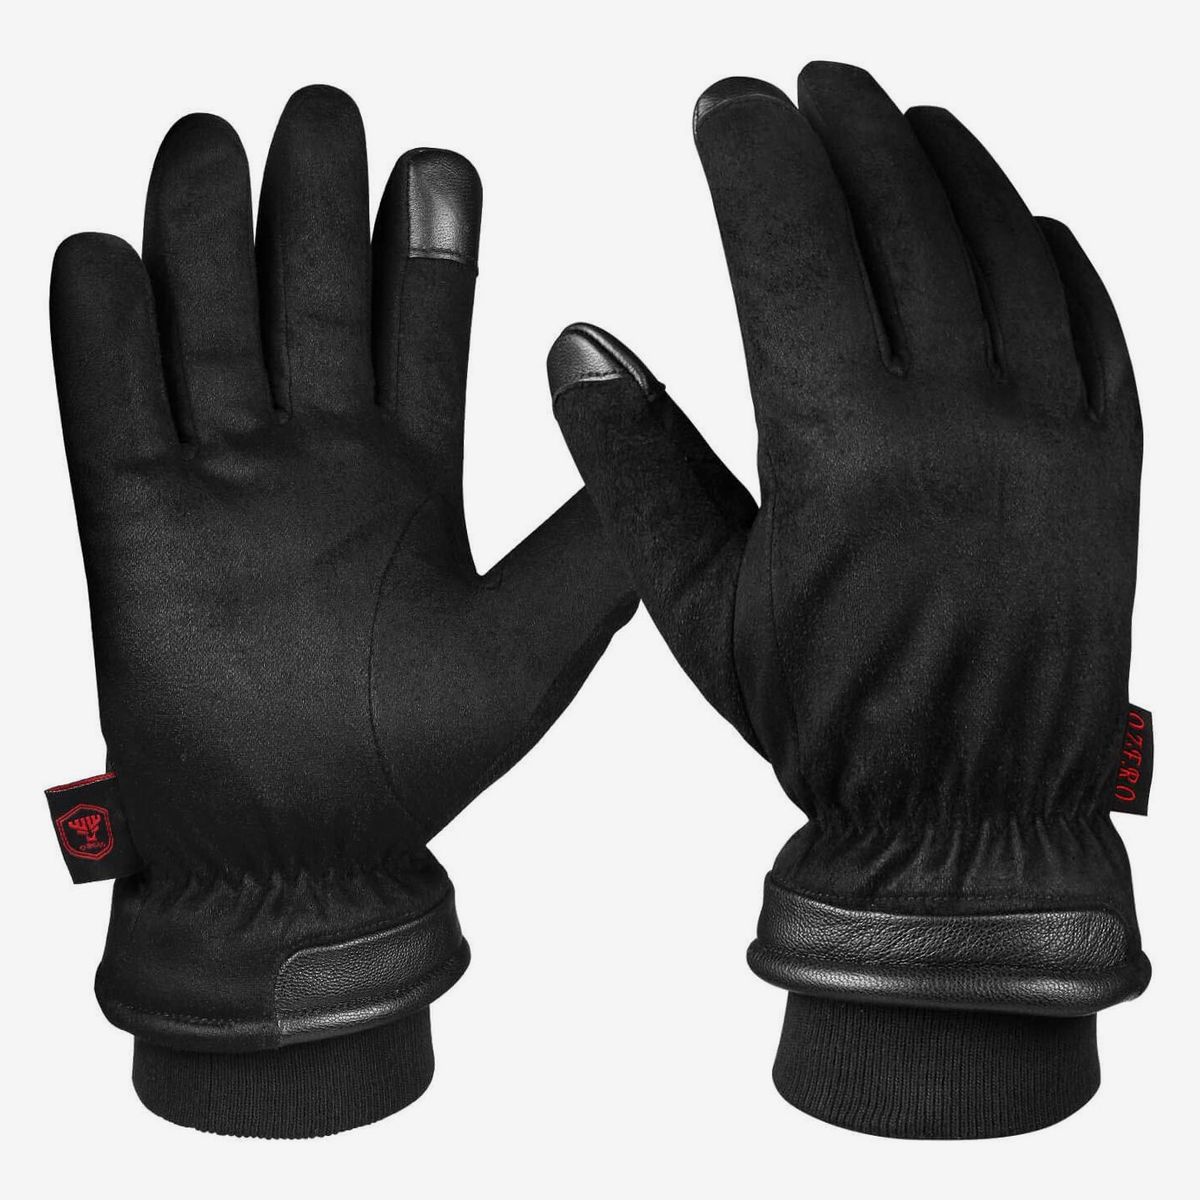 Men's leather gloves Black Unbranded winter gloves lined warm gloves Brand New 